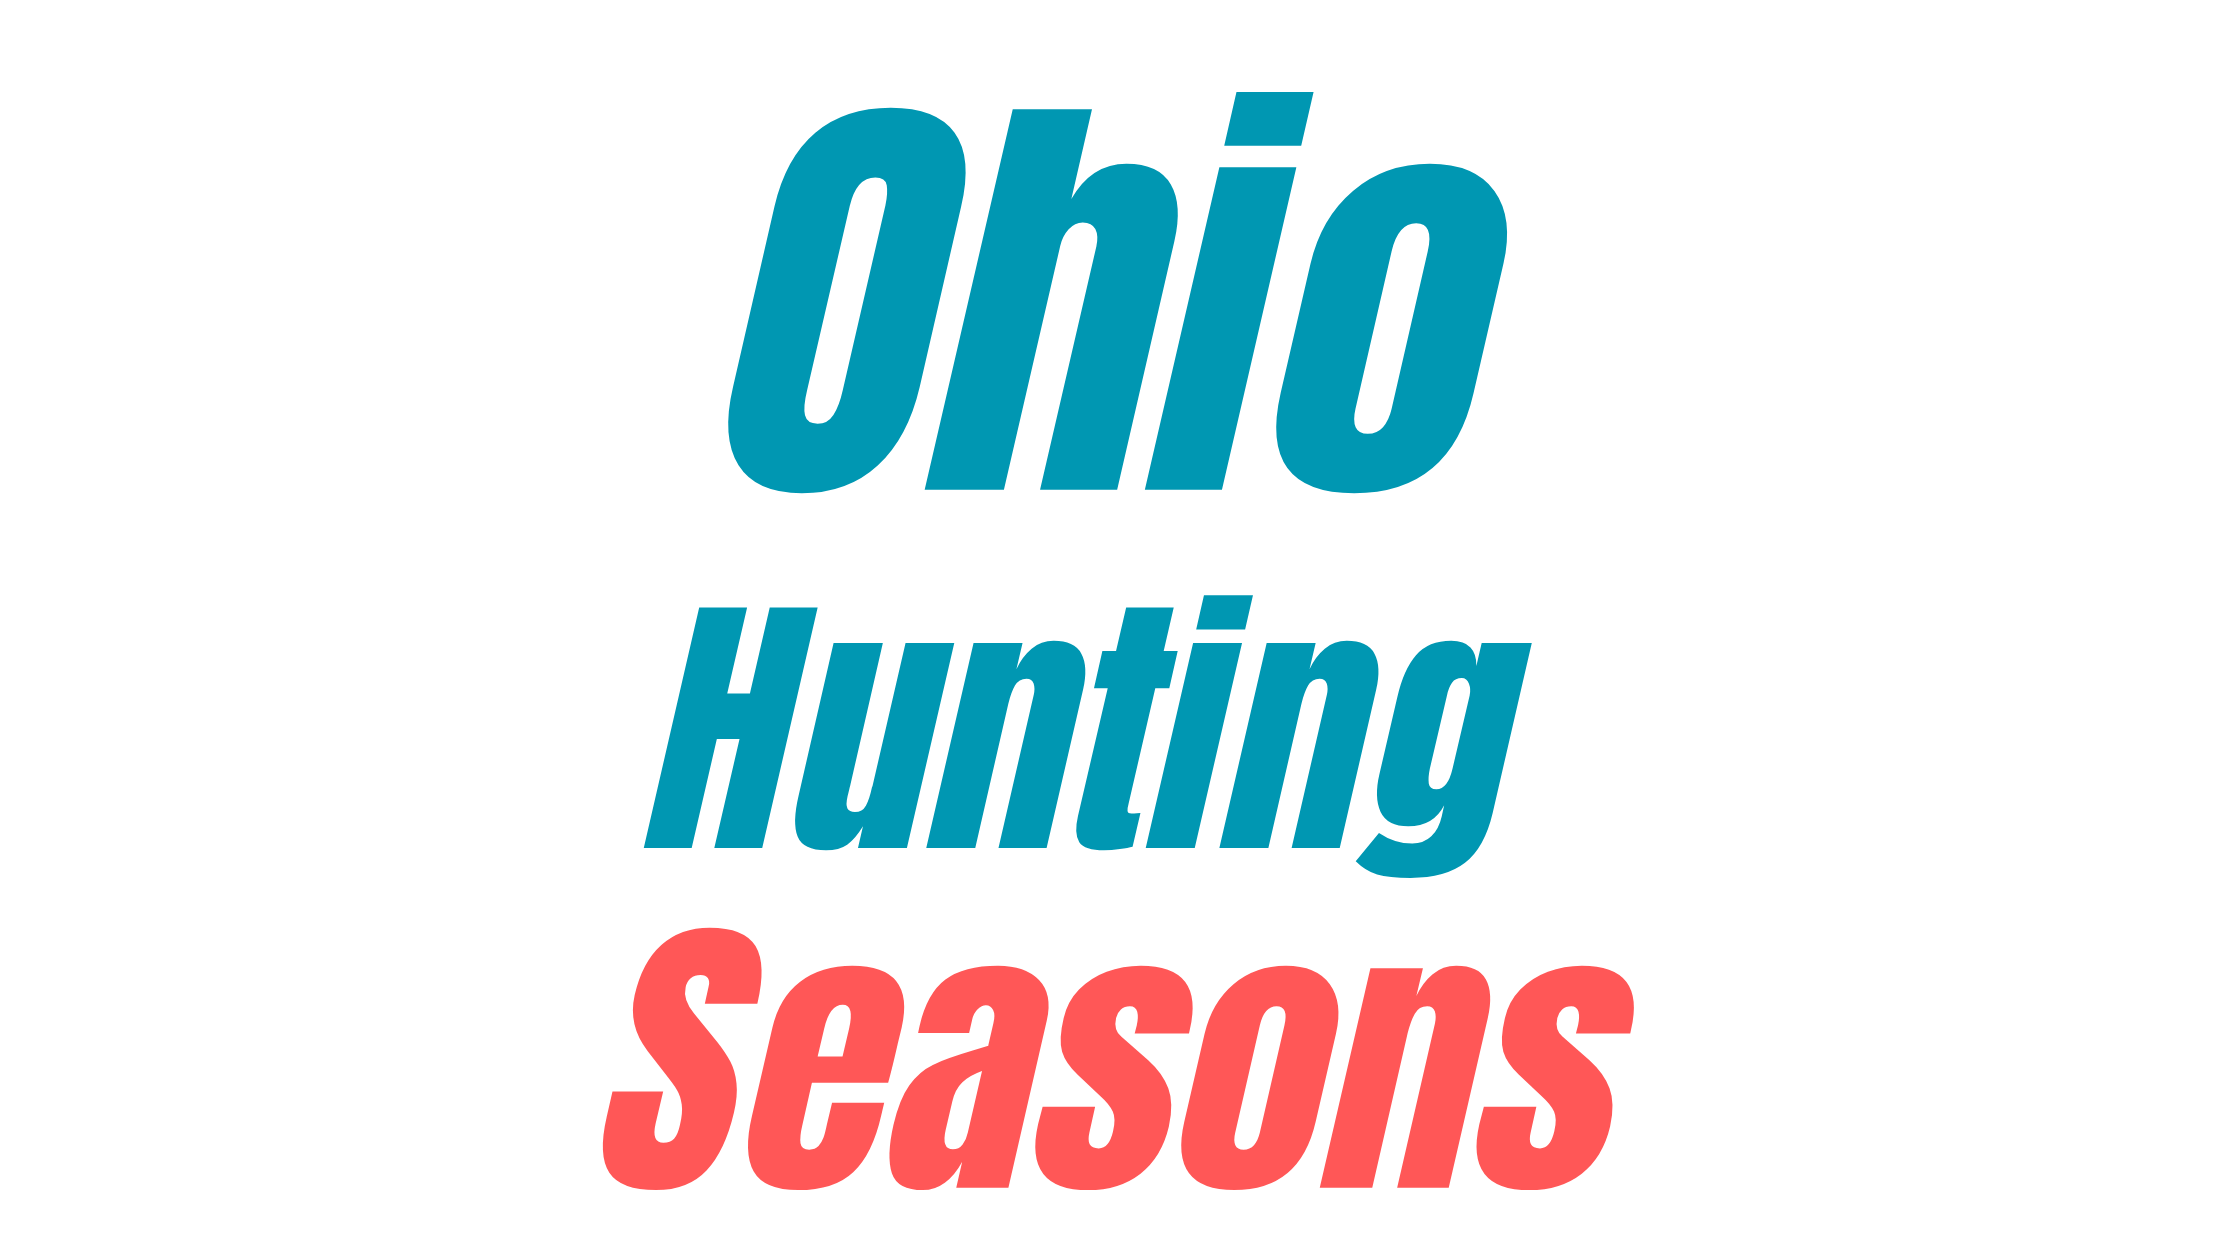 Ohio Hunting Seasons